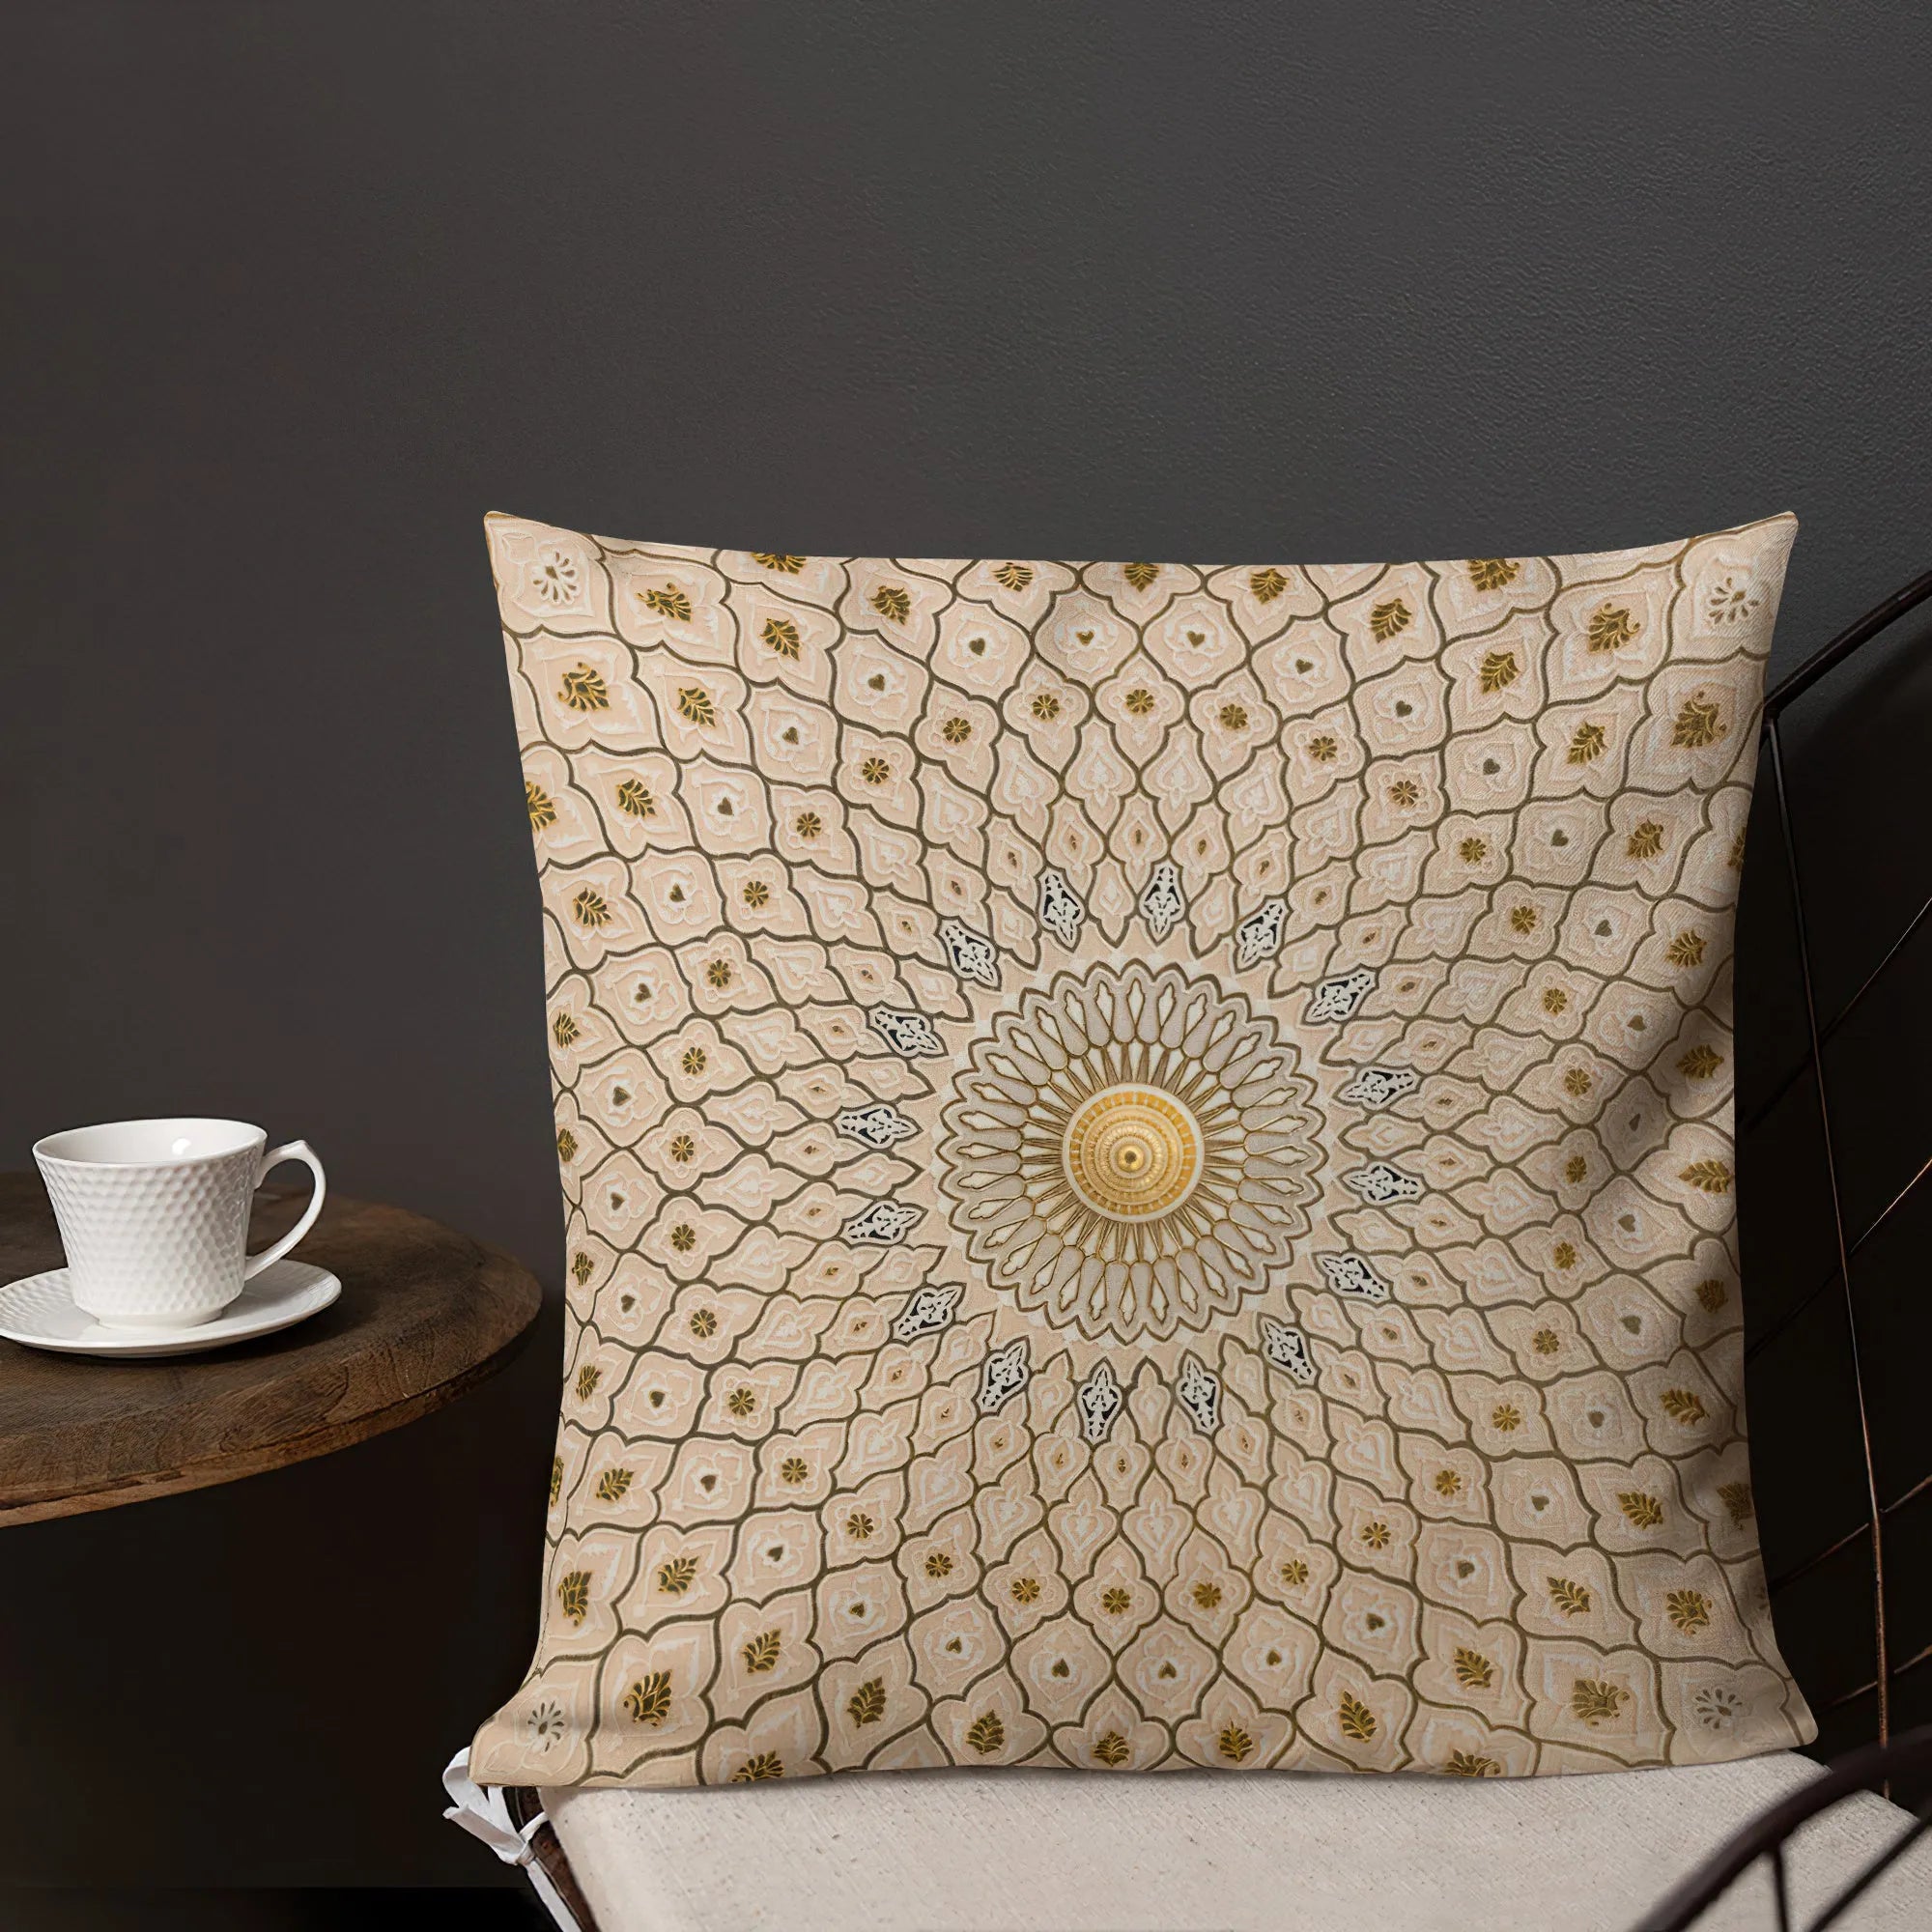 Divine Order Cushion - Islamic Geometric Pattern Pillow - Throw Pillows - Aesthetic Art